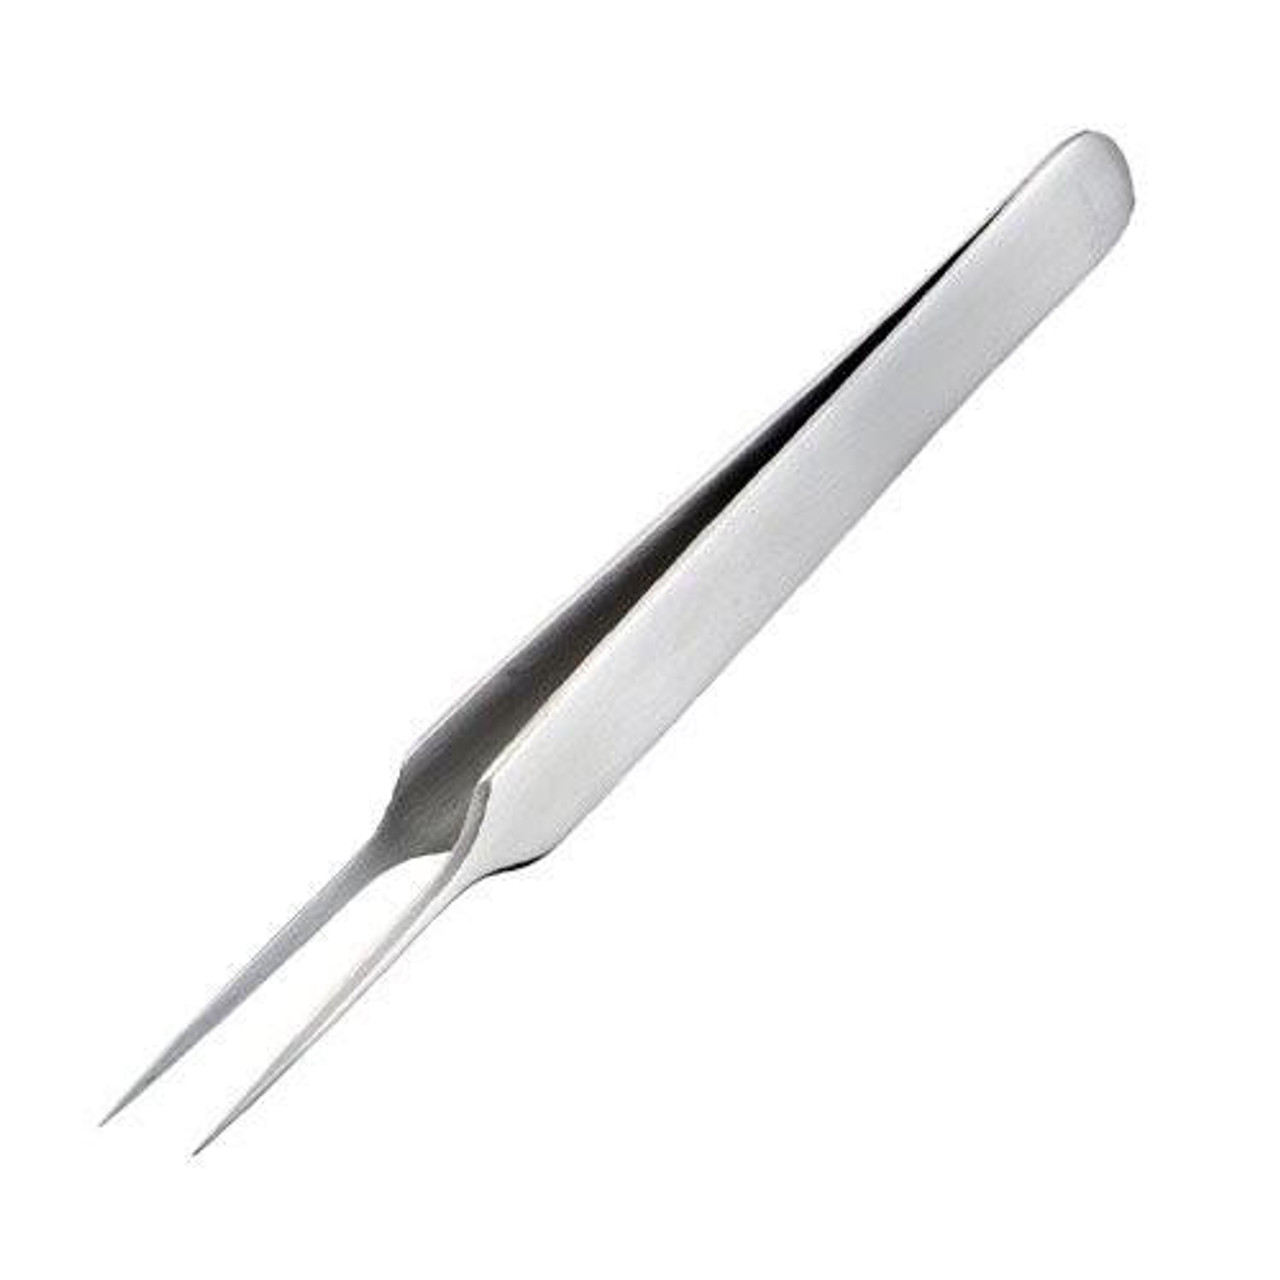 PT-05 slender long nose tweezers (stainless steel, 120mm